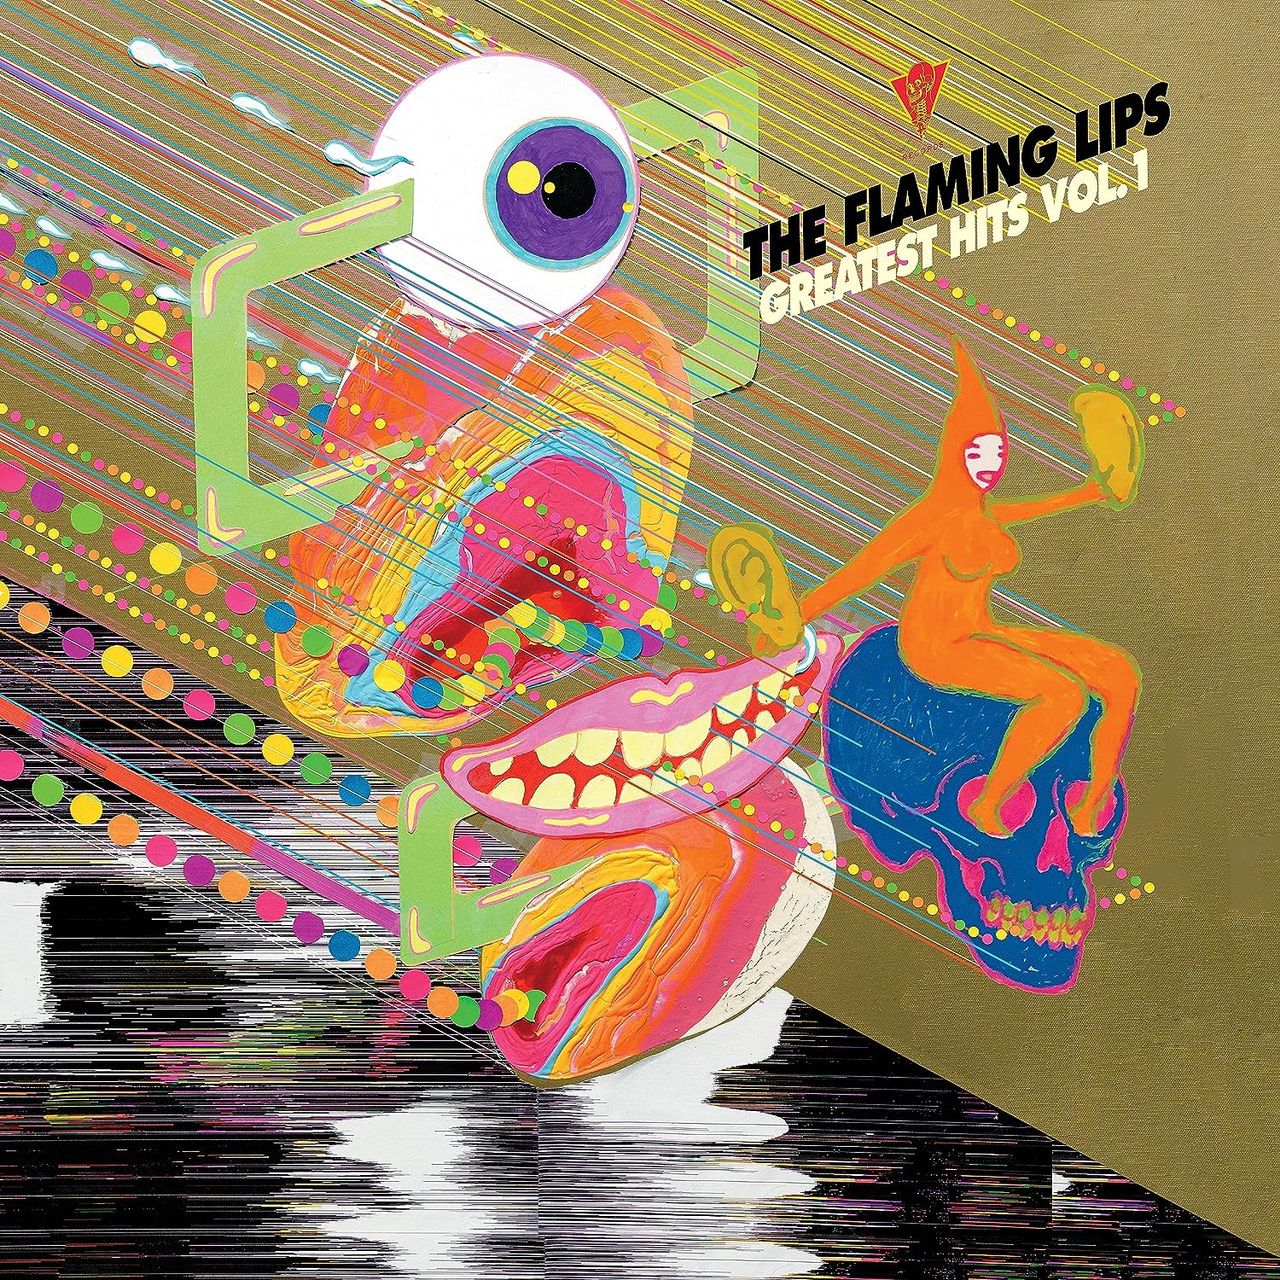 The Flaming Lips Greatest Hits Vol. 1 - Gold Vinyl - Sealed UK vinyl LP album (LP record) F-LLPGR819277